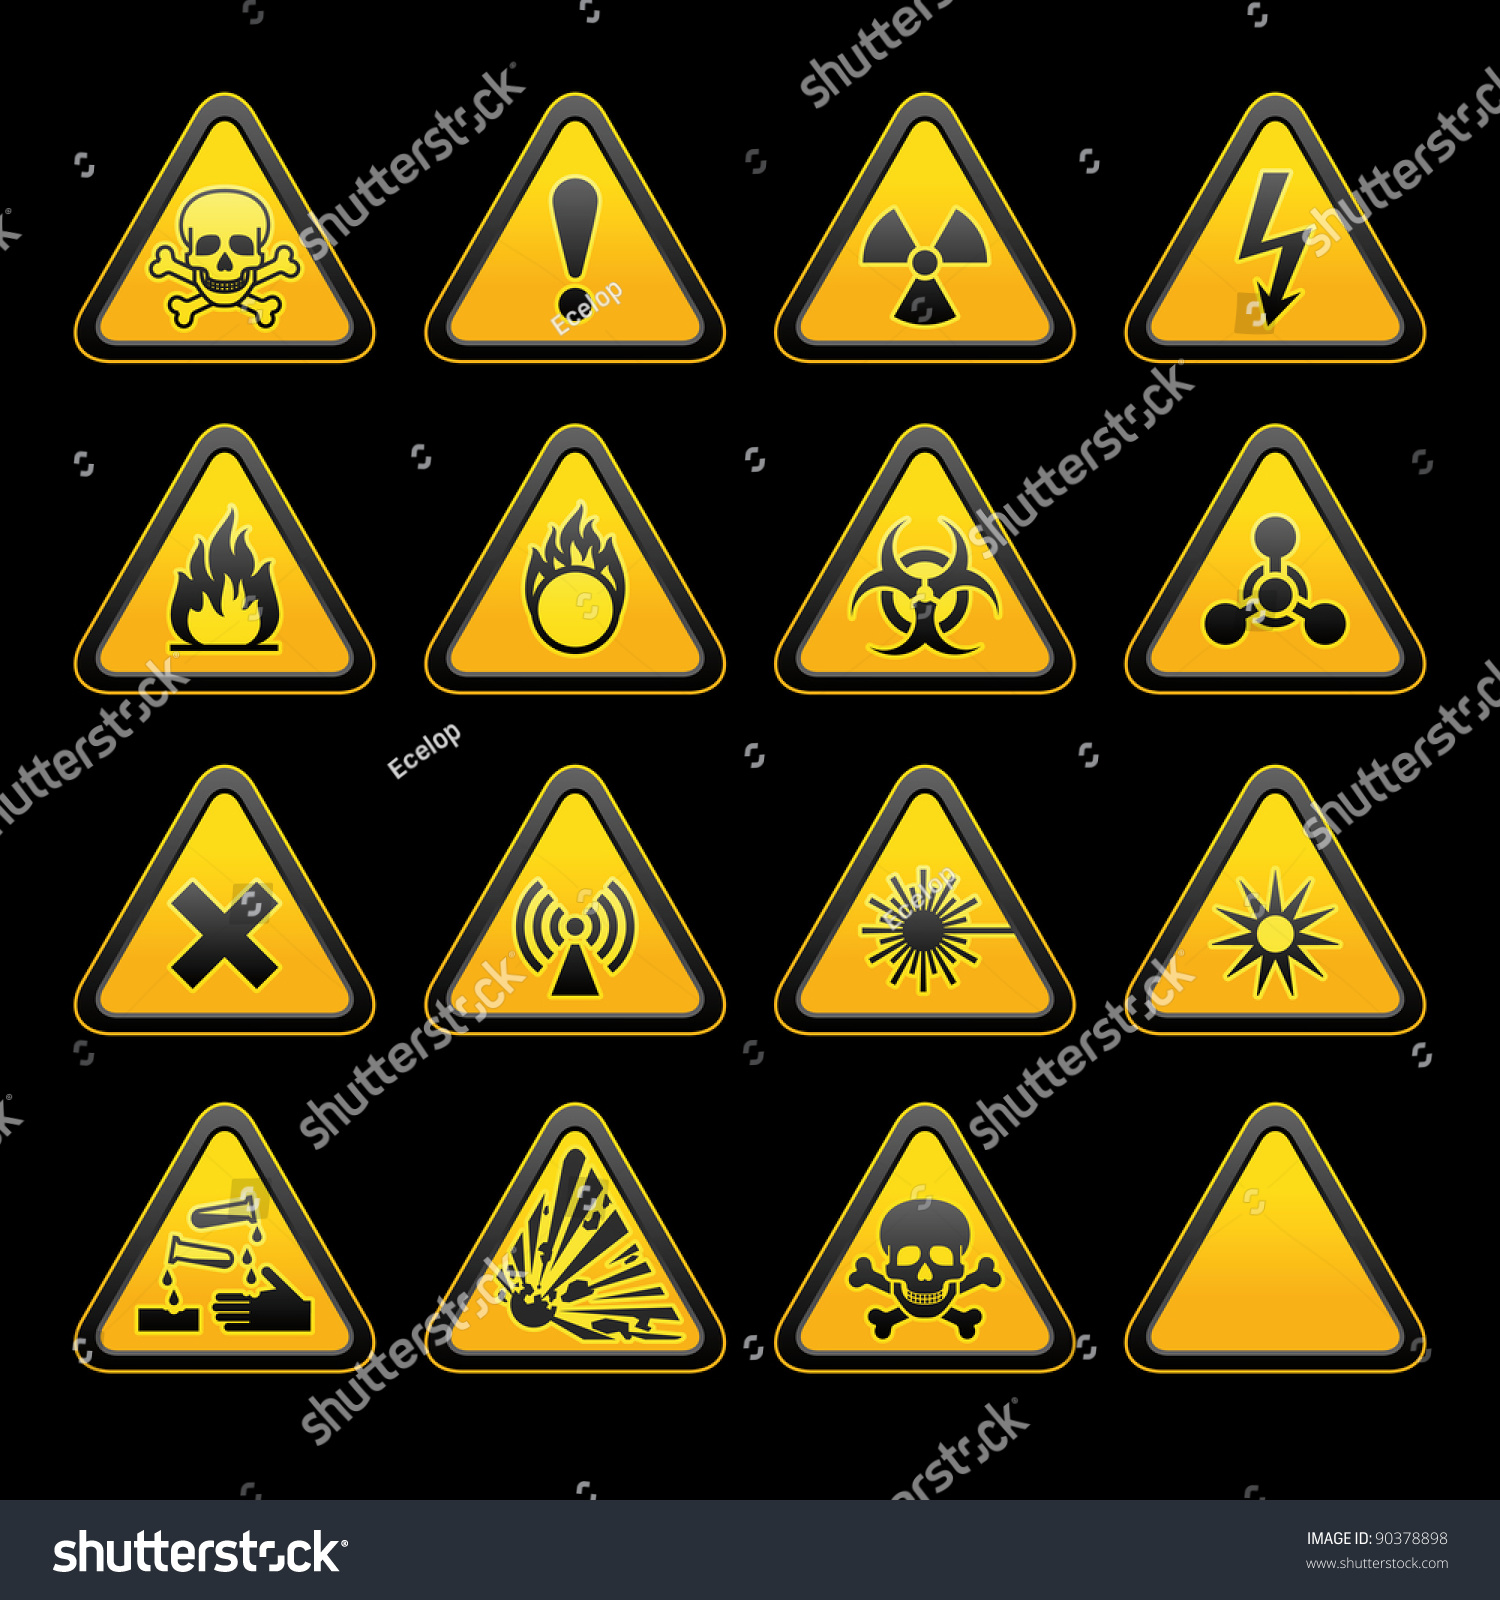 Set Triangular Warning Signs Hazard Symbols Stock Vector 90378898 ...